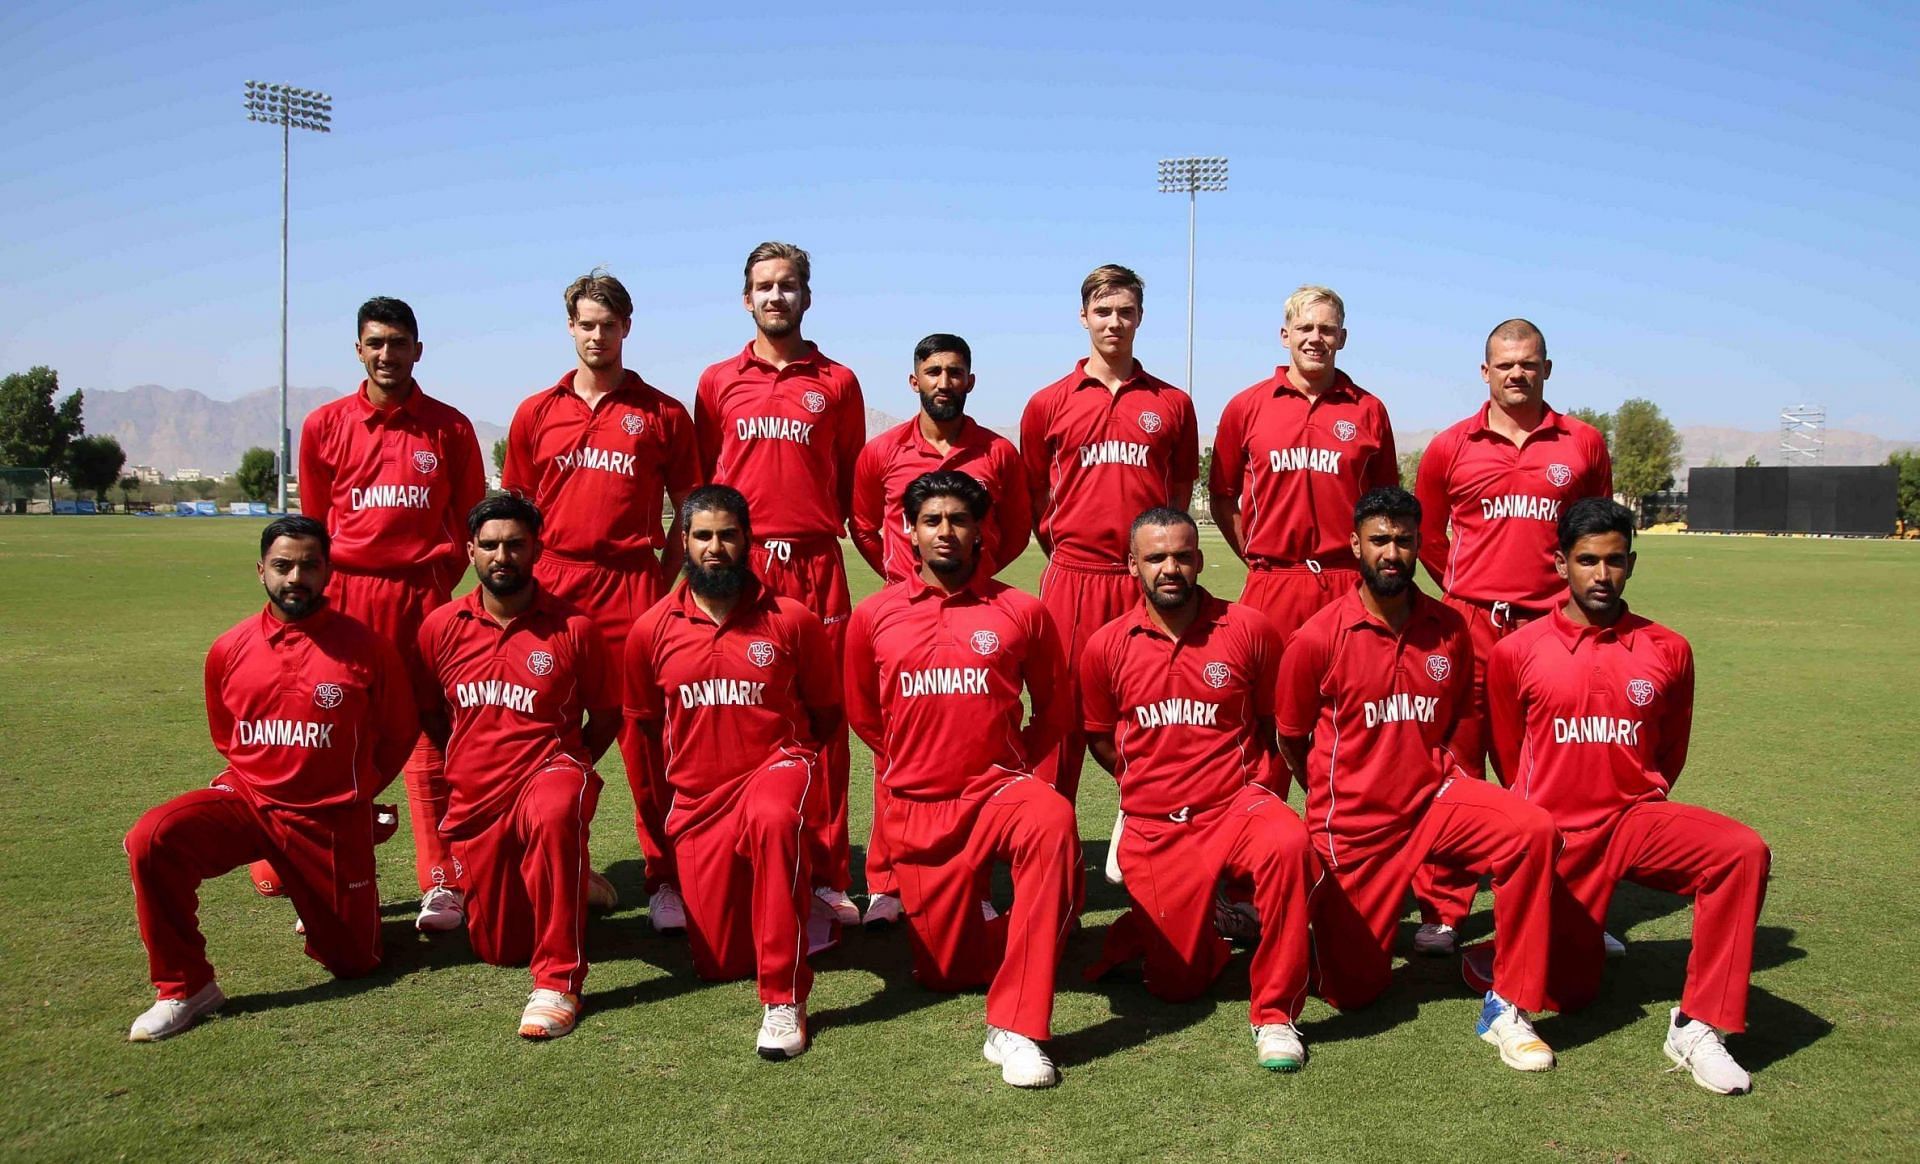 The Denmark cricket team poses for a photo (Image Courtesy: Emerging Cricket)